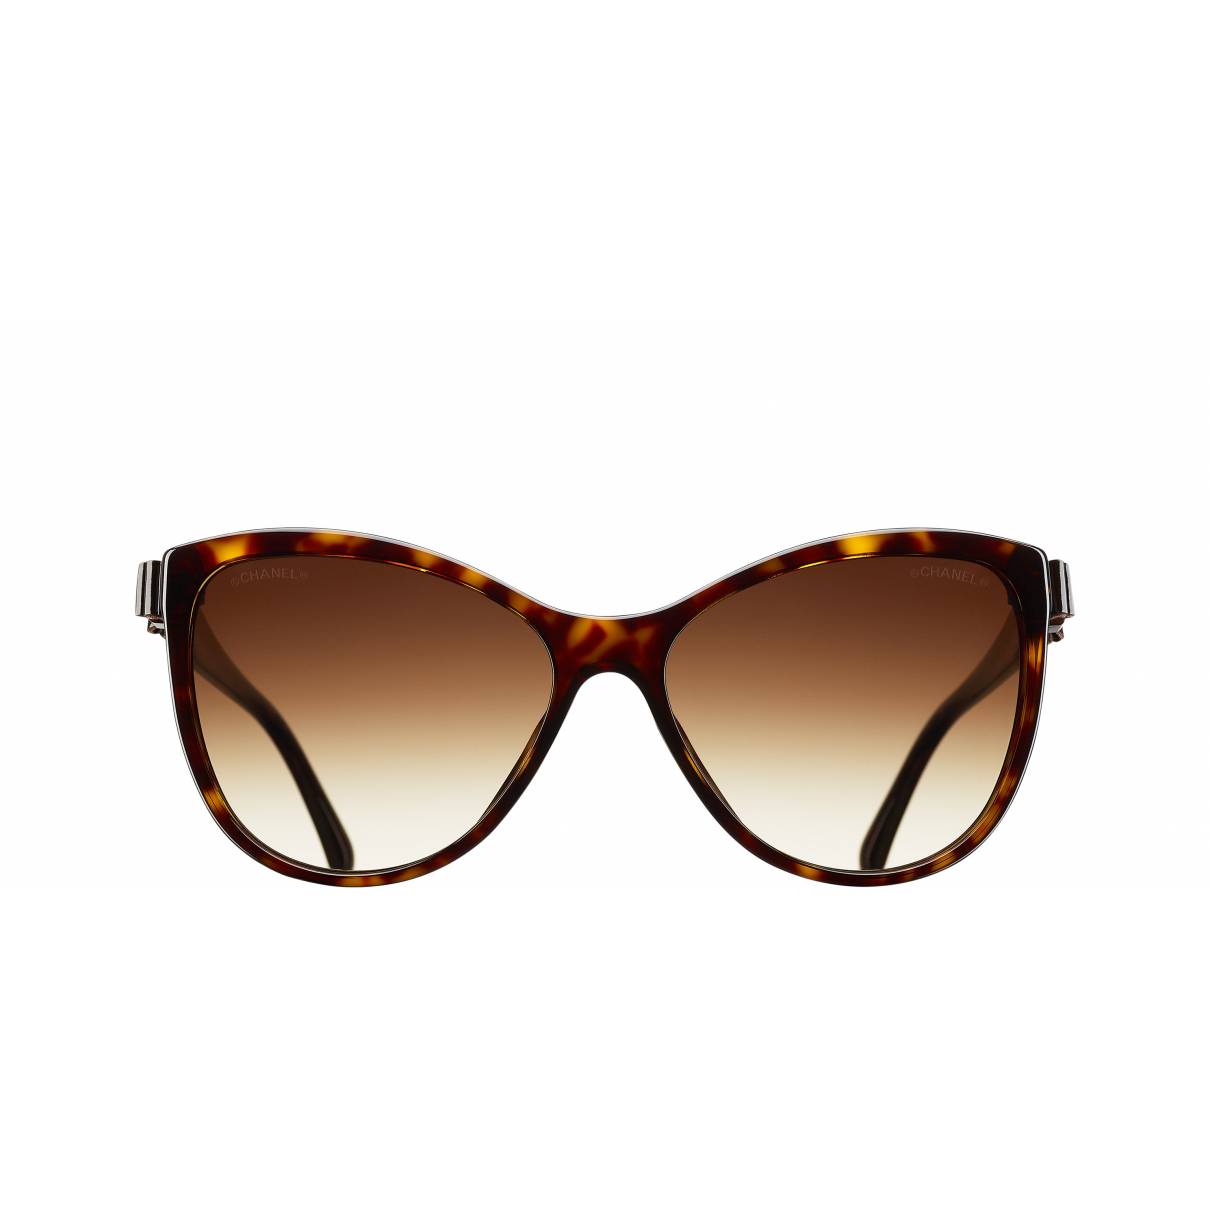 Chanel Sunglasses-5470